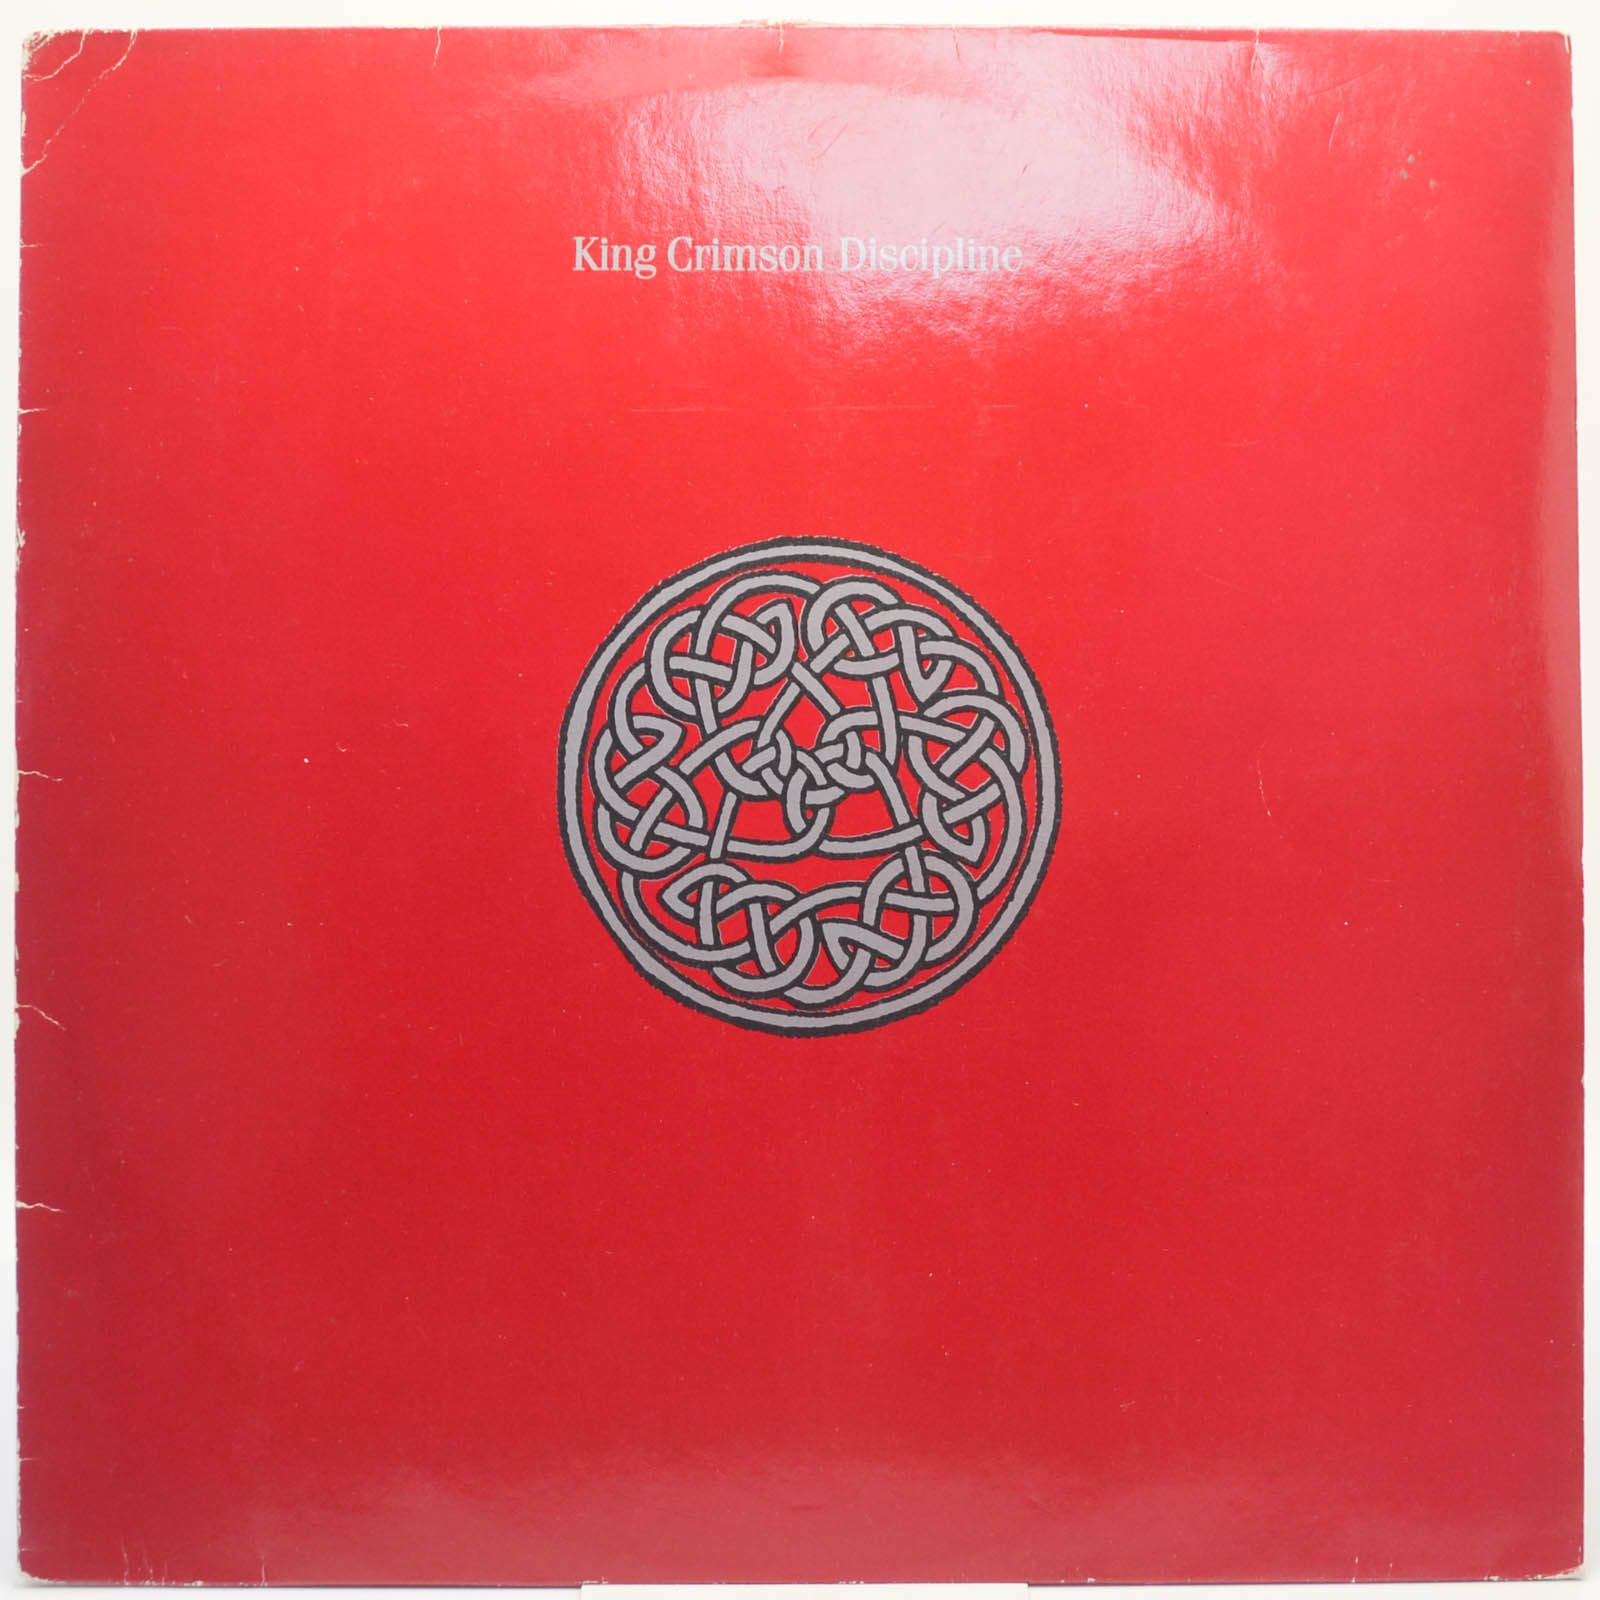 King Crimson — Discipline, 1981